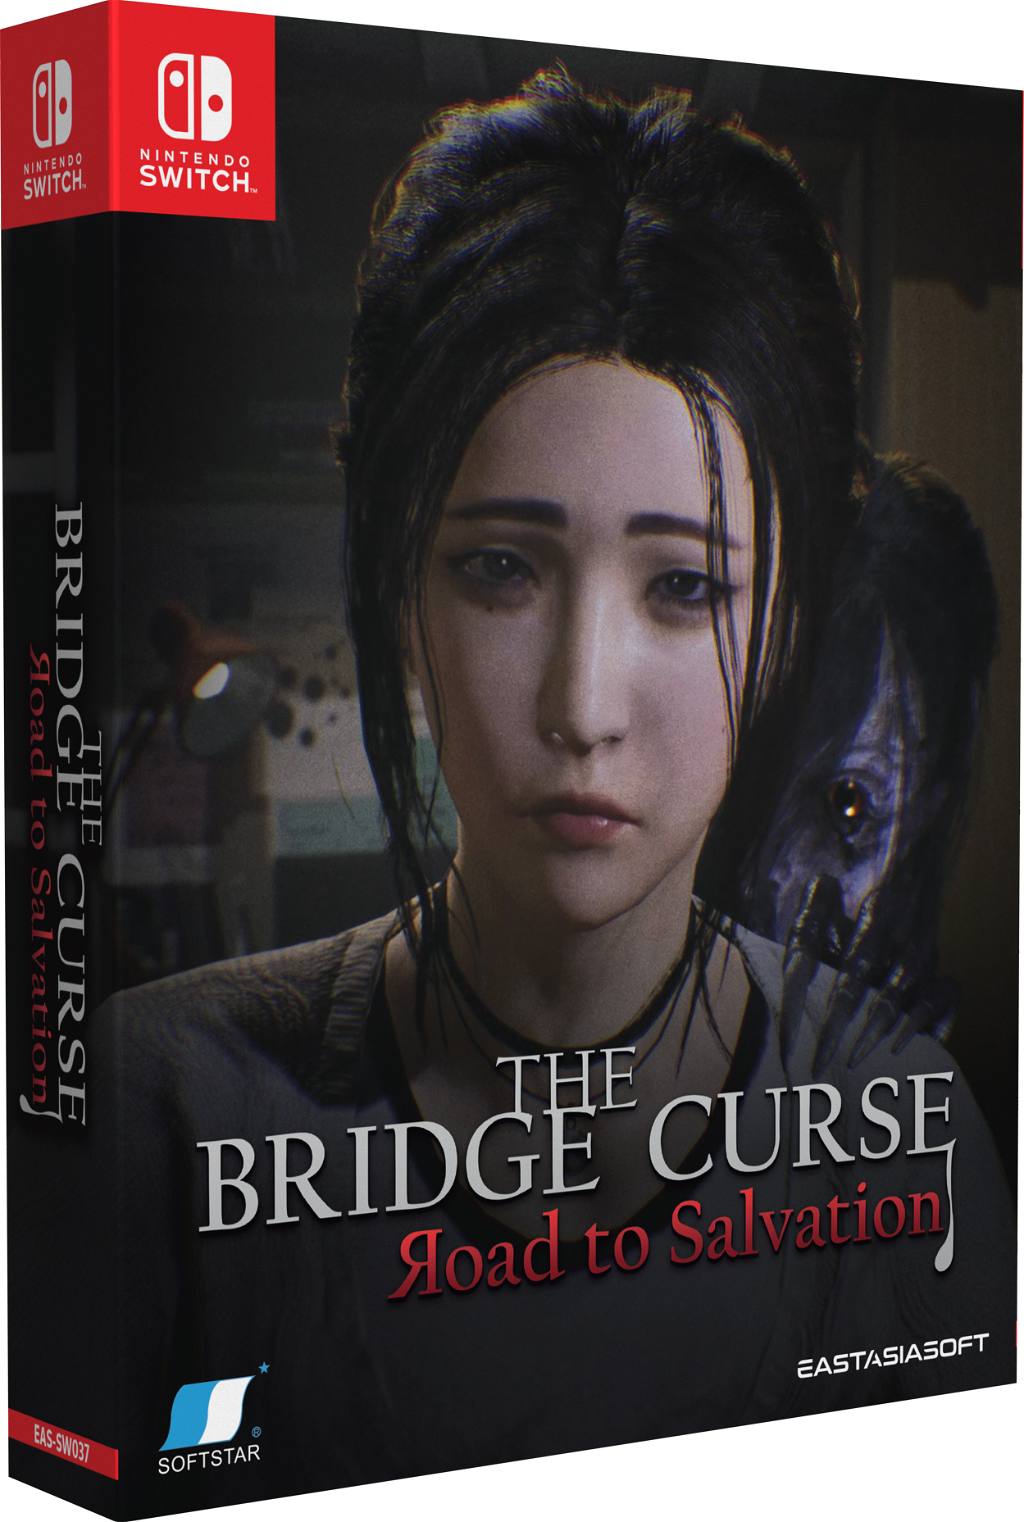 The Bridge Curse: Road to Salvation